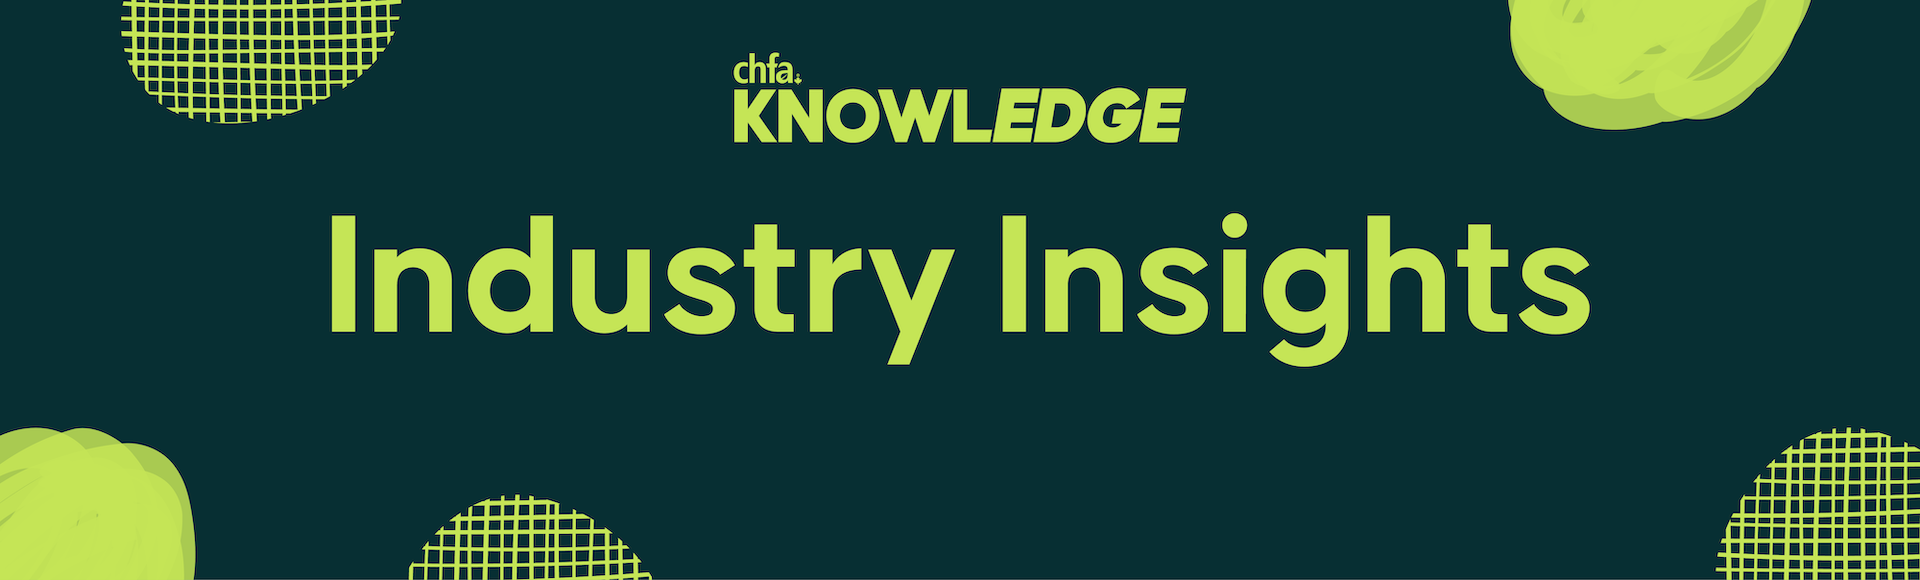 chfa industry insights